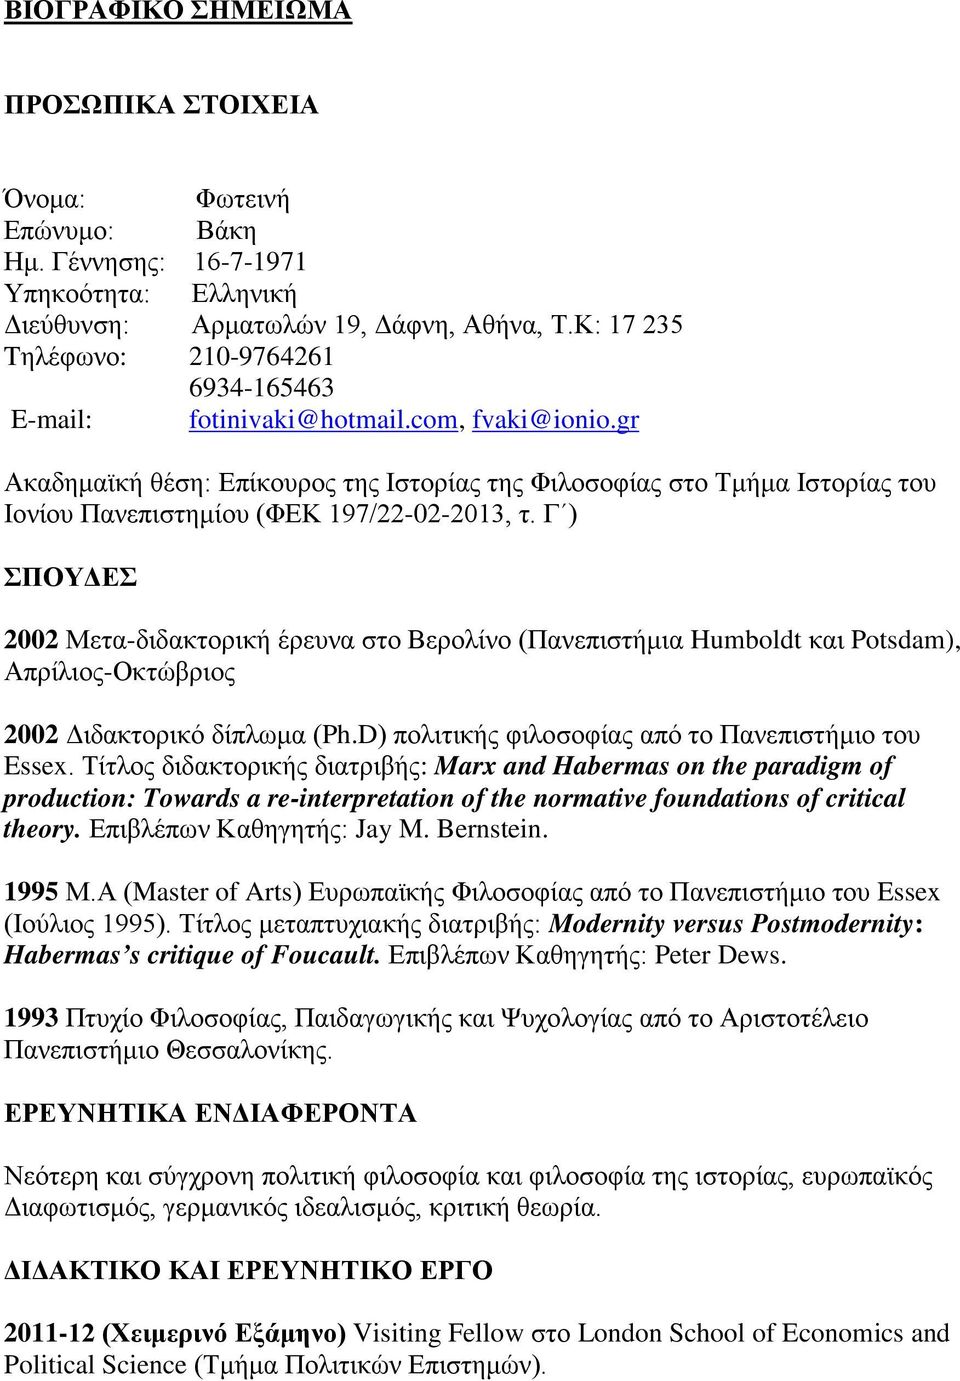 gr Ακαδημαϊκή θέση: Eπίκουρος της Ιστορίας της Φιλοσοφίας στο Τμήμα Ιστορίας του Ιονίου Πανεπιστημίου (ΦΕΚ 197/22-02-2013, τ.